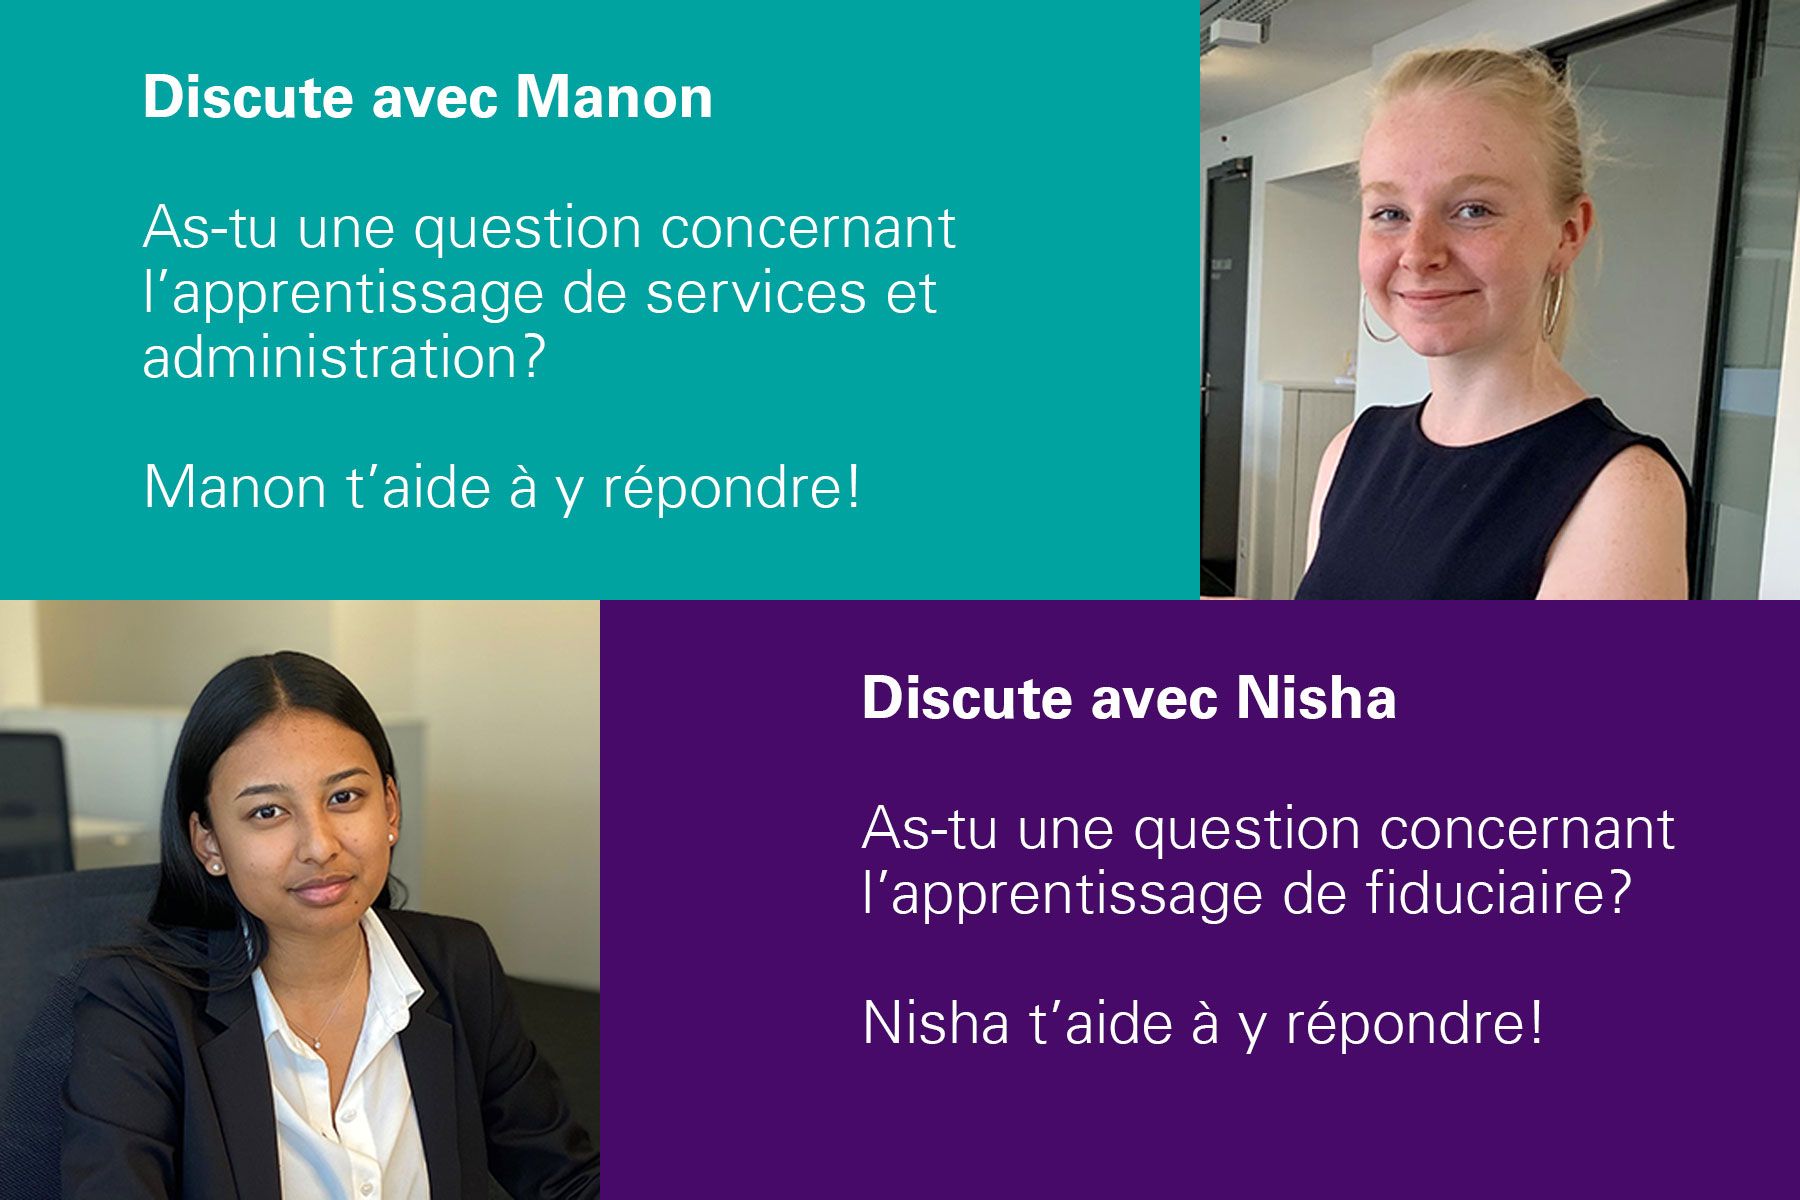 Meet Manon and Nisha